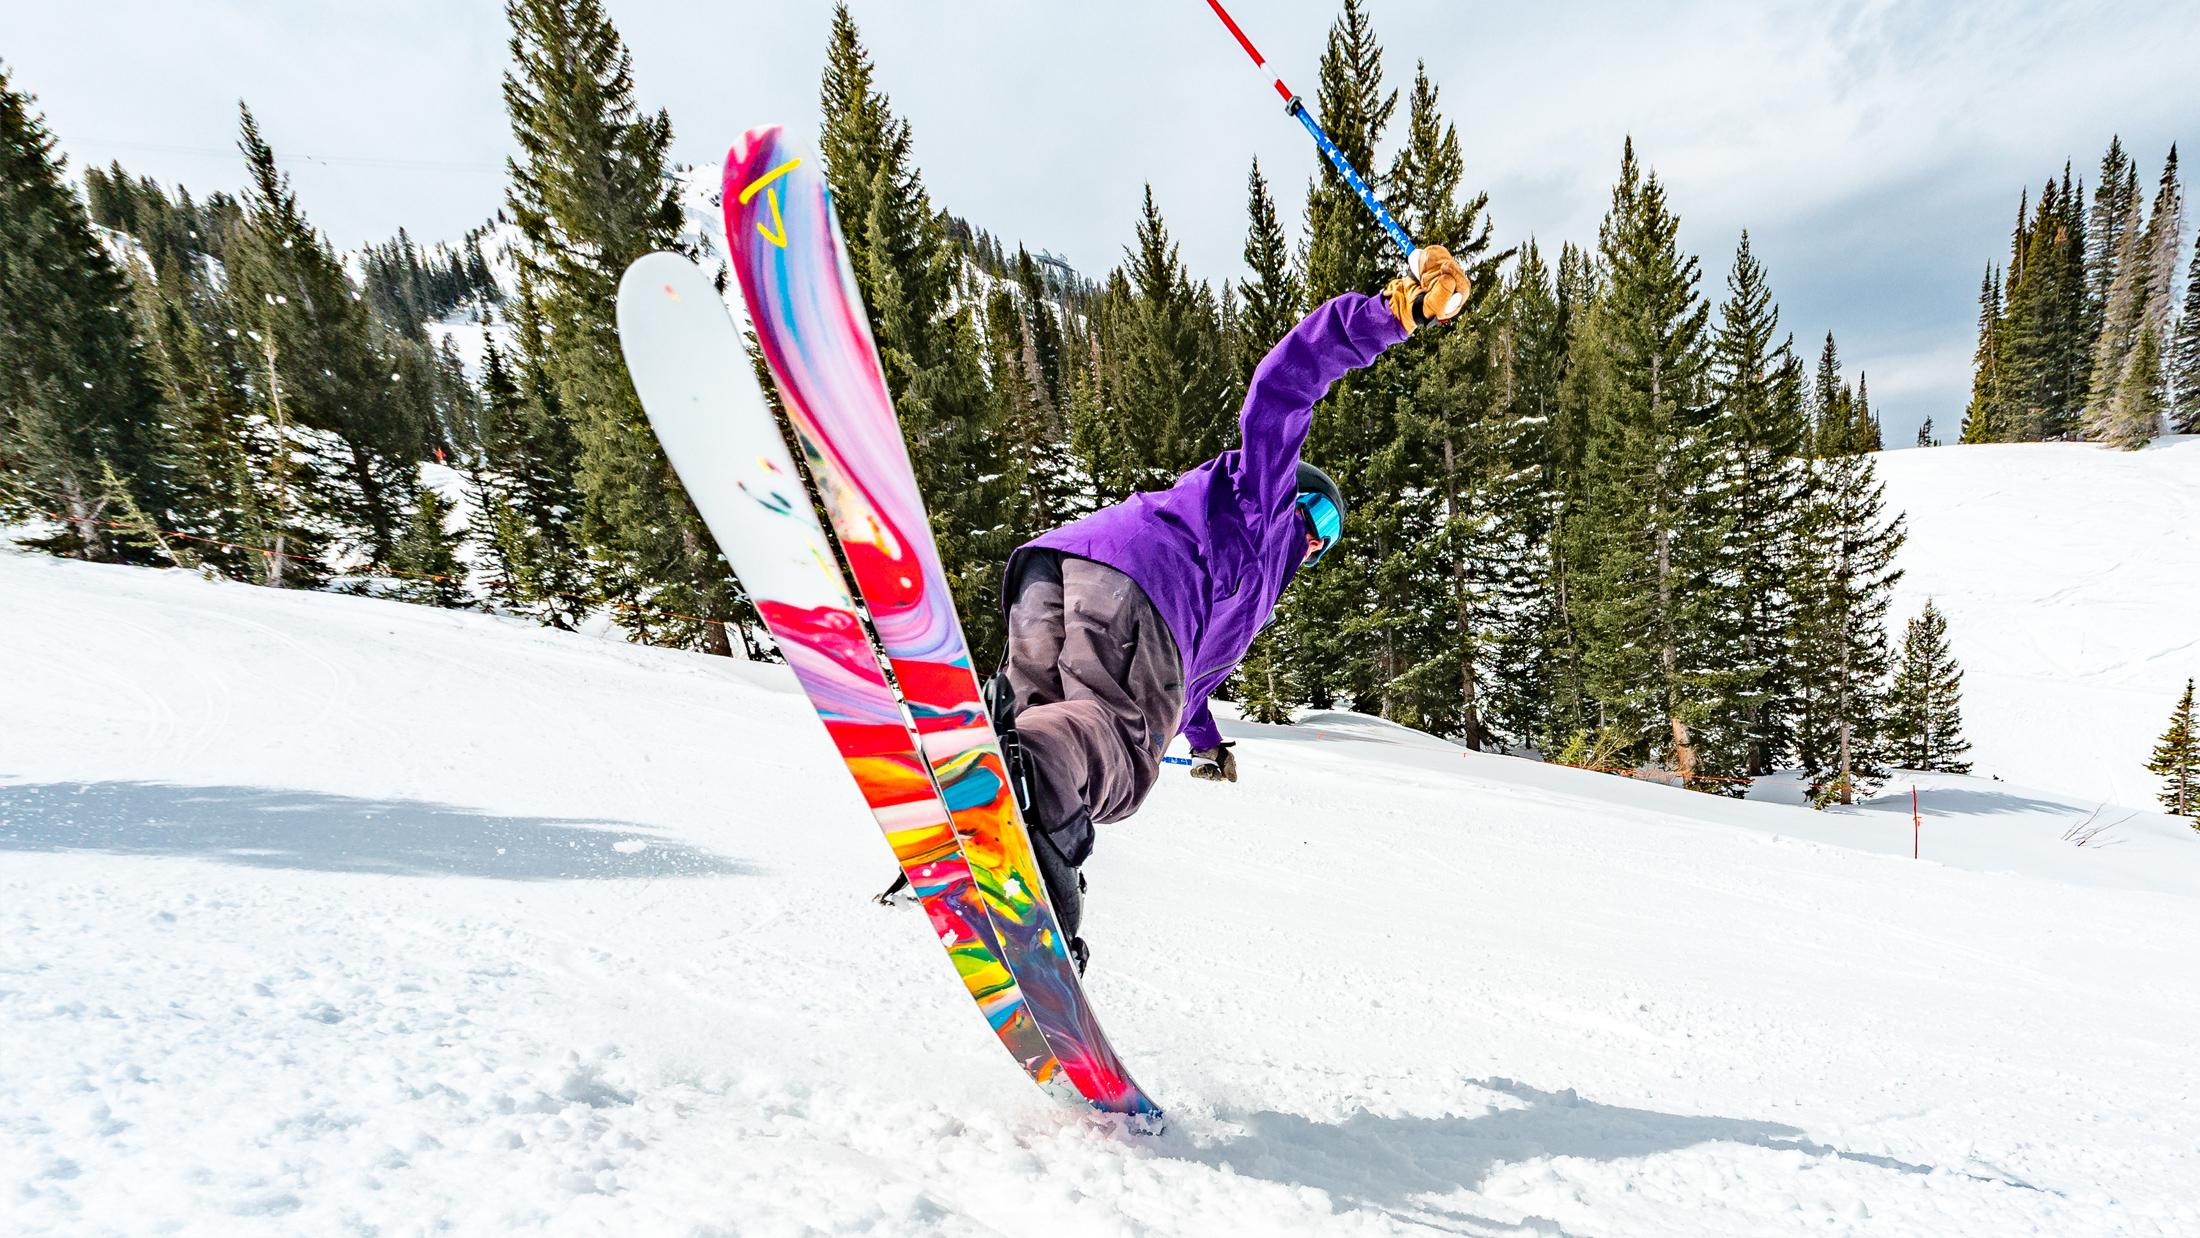 The Joyride "PRISM" Alex Voinea x J Collab Limited Edition Ski Shredding Image